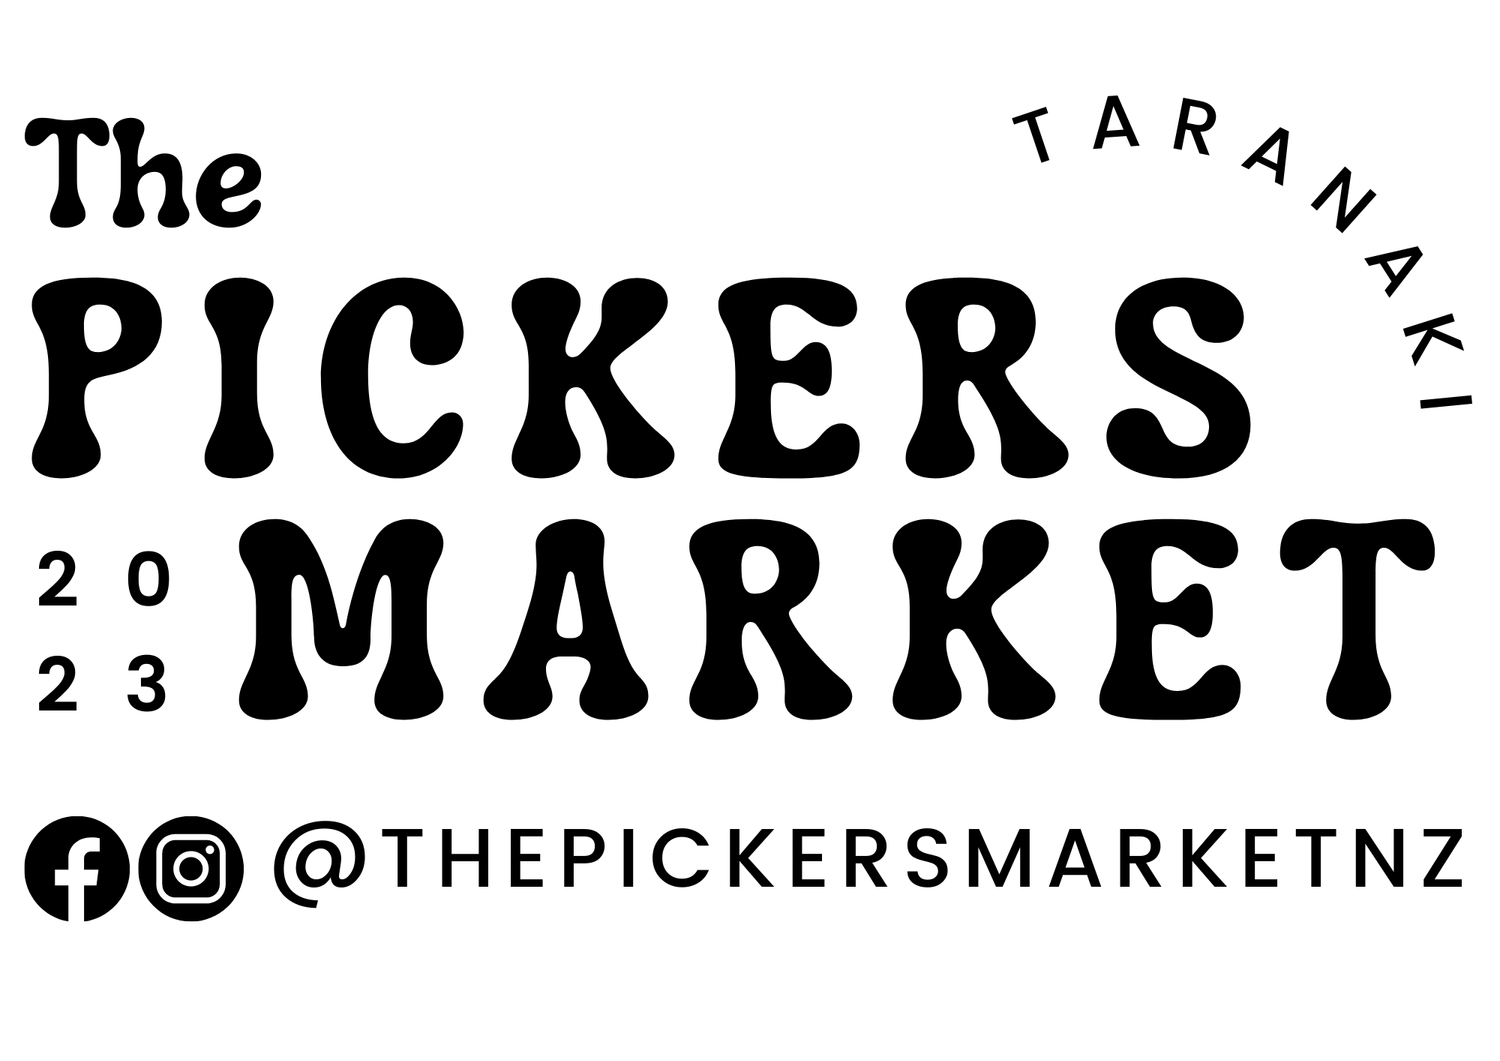 The Pickers Market NZ